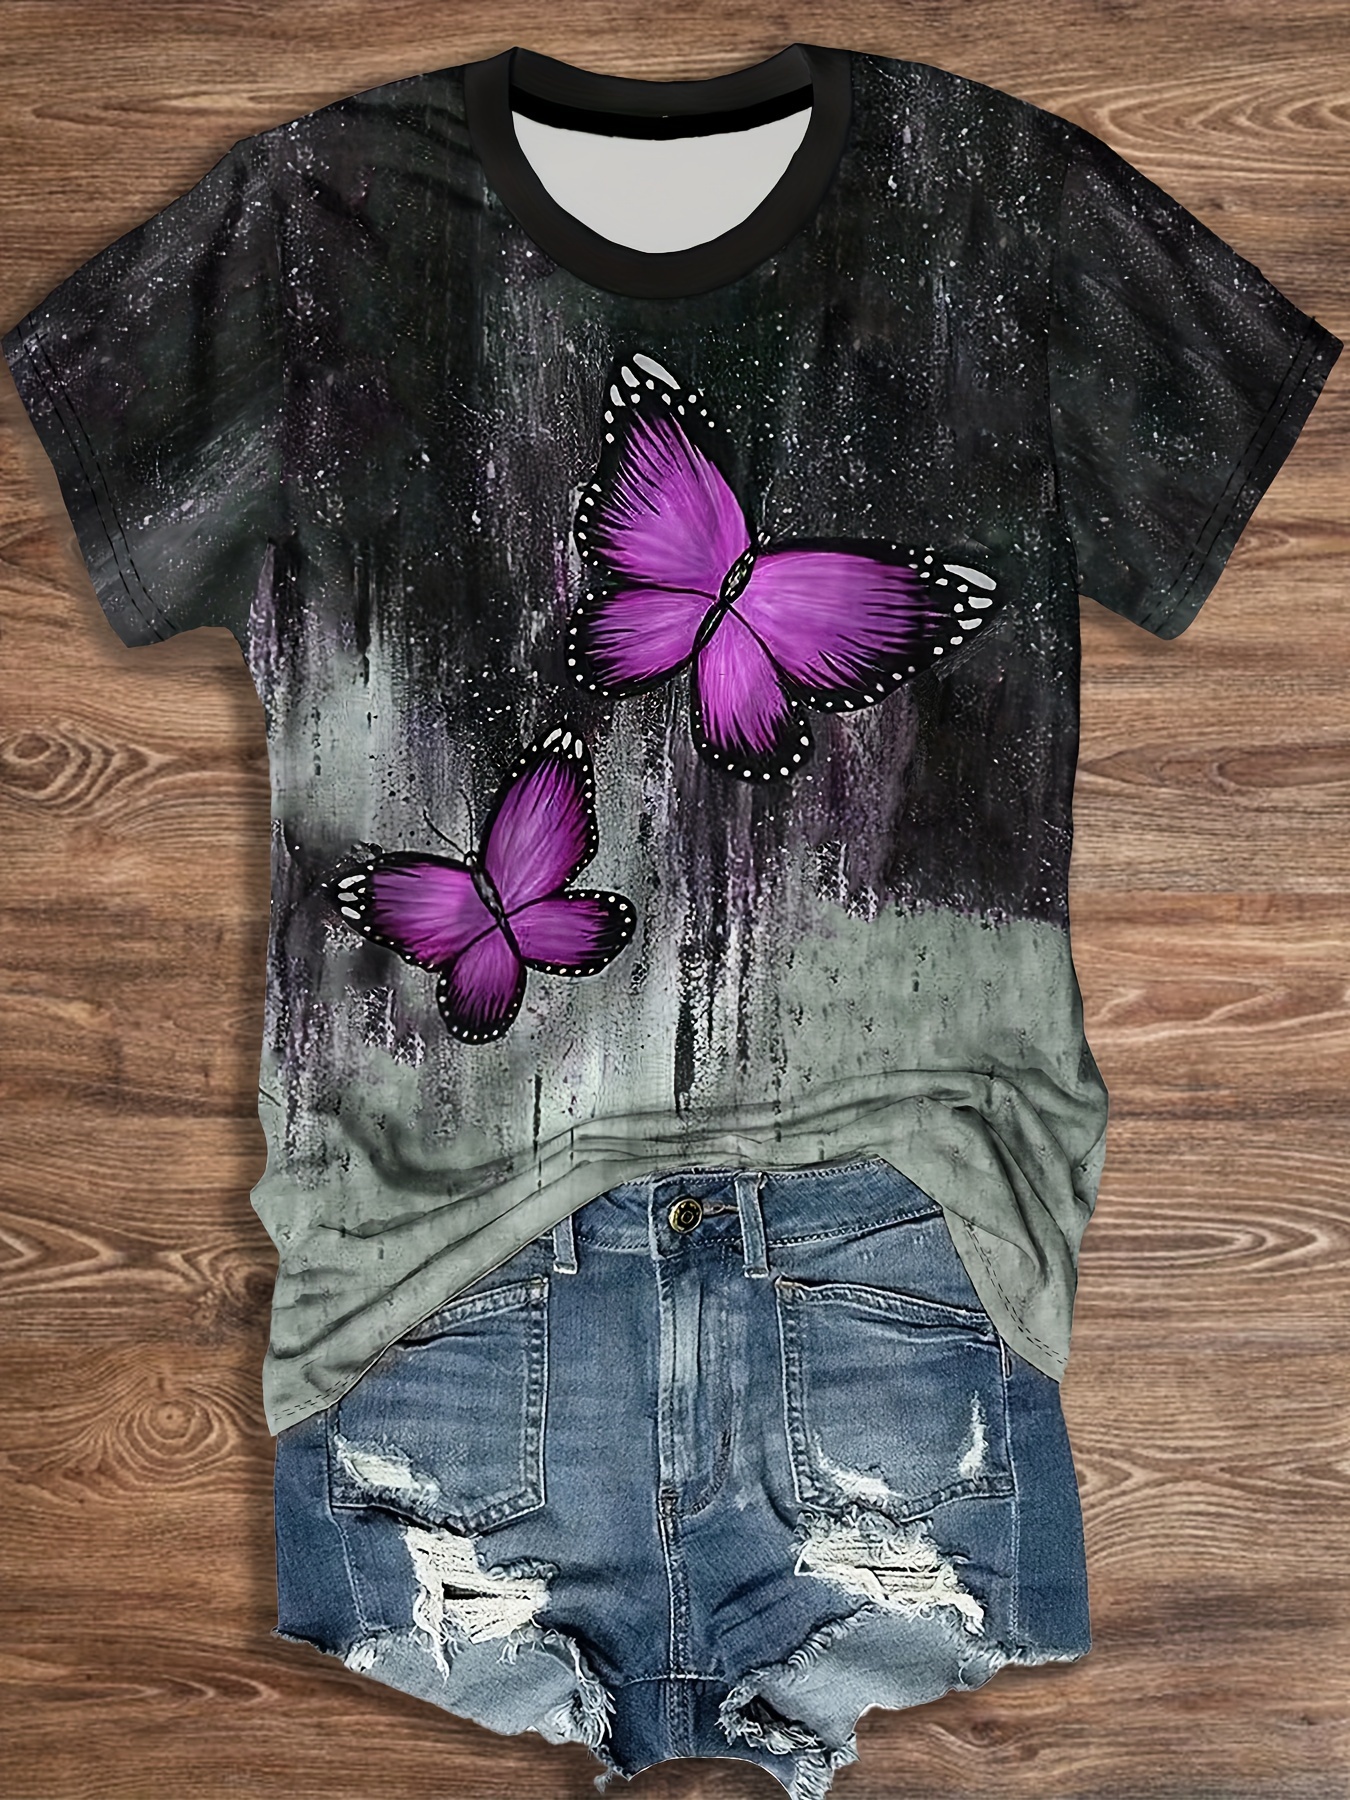 2DXuixsh Shirts for Women Tall Women Fashion Reflective Butterfly Print  Short Sleeved T Shirt Crop Top Plain Long Sleeve Shirt Womens Tops T Shirts